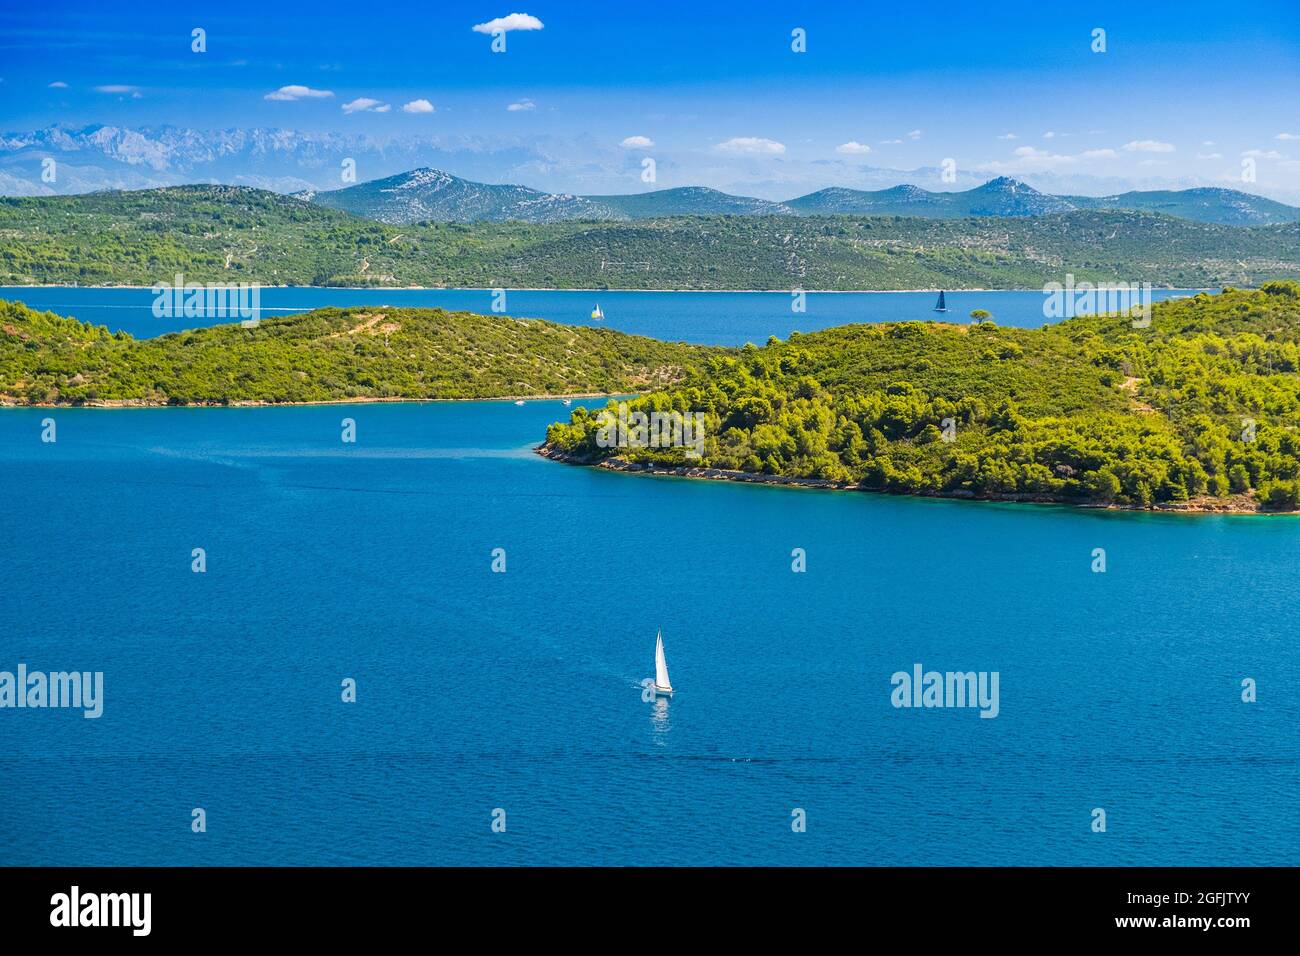 Panoramic view of amazing Adriatic coastline. Island of Rava near Dugi Otok, Croatia. Stock Photo